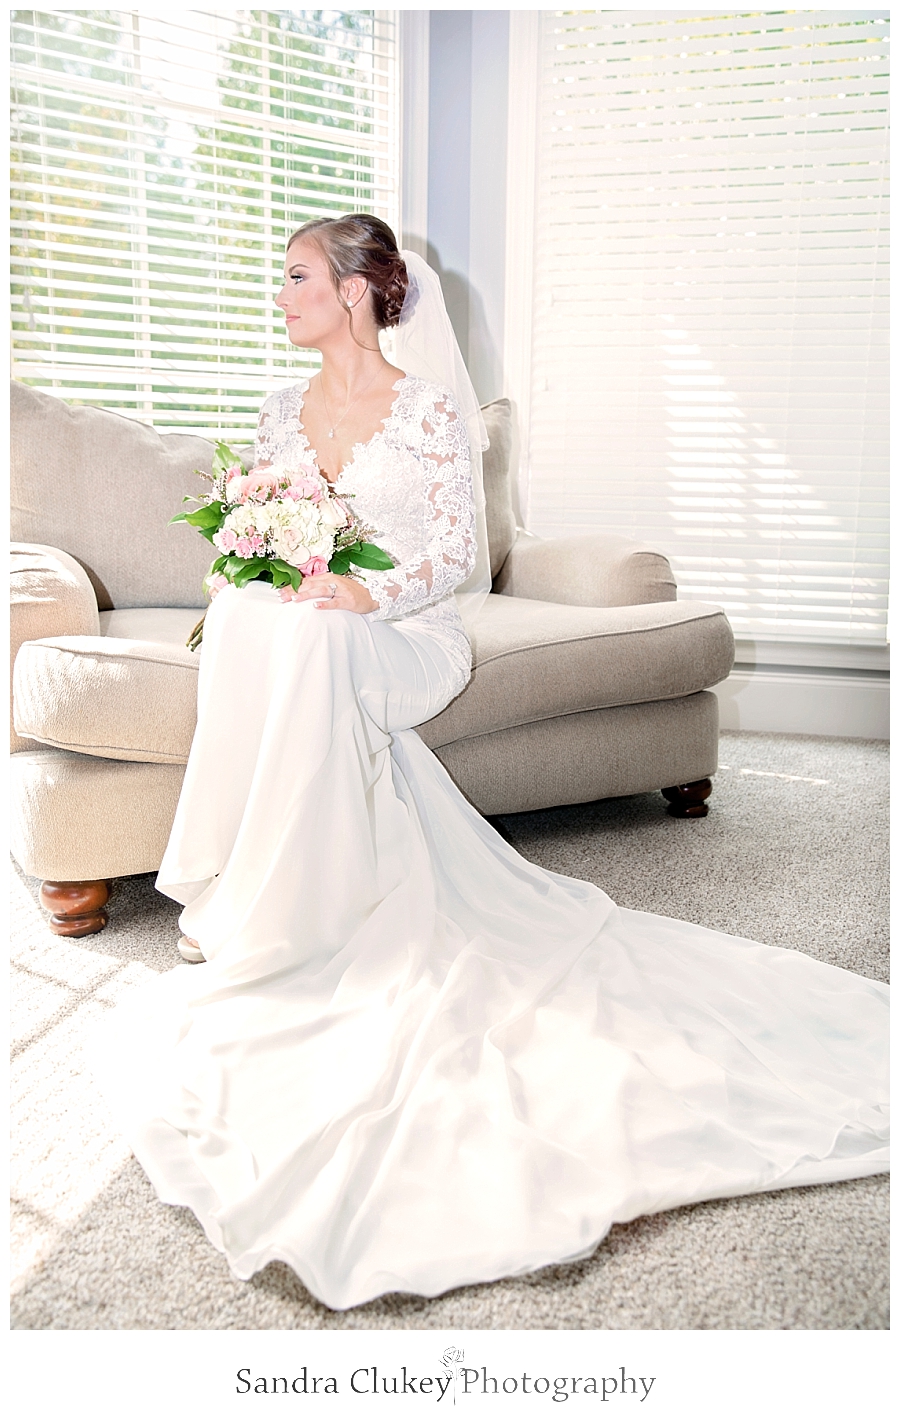 Exquisite bridal portrait of bride by window.